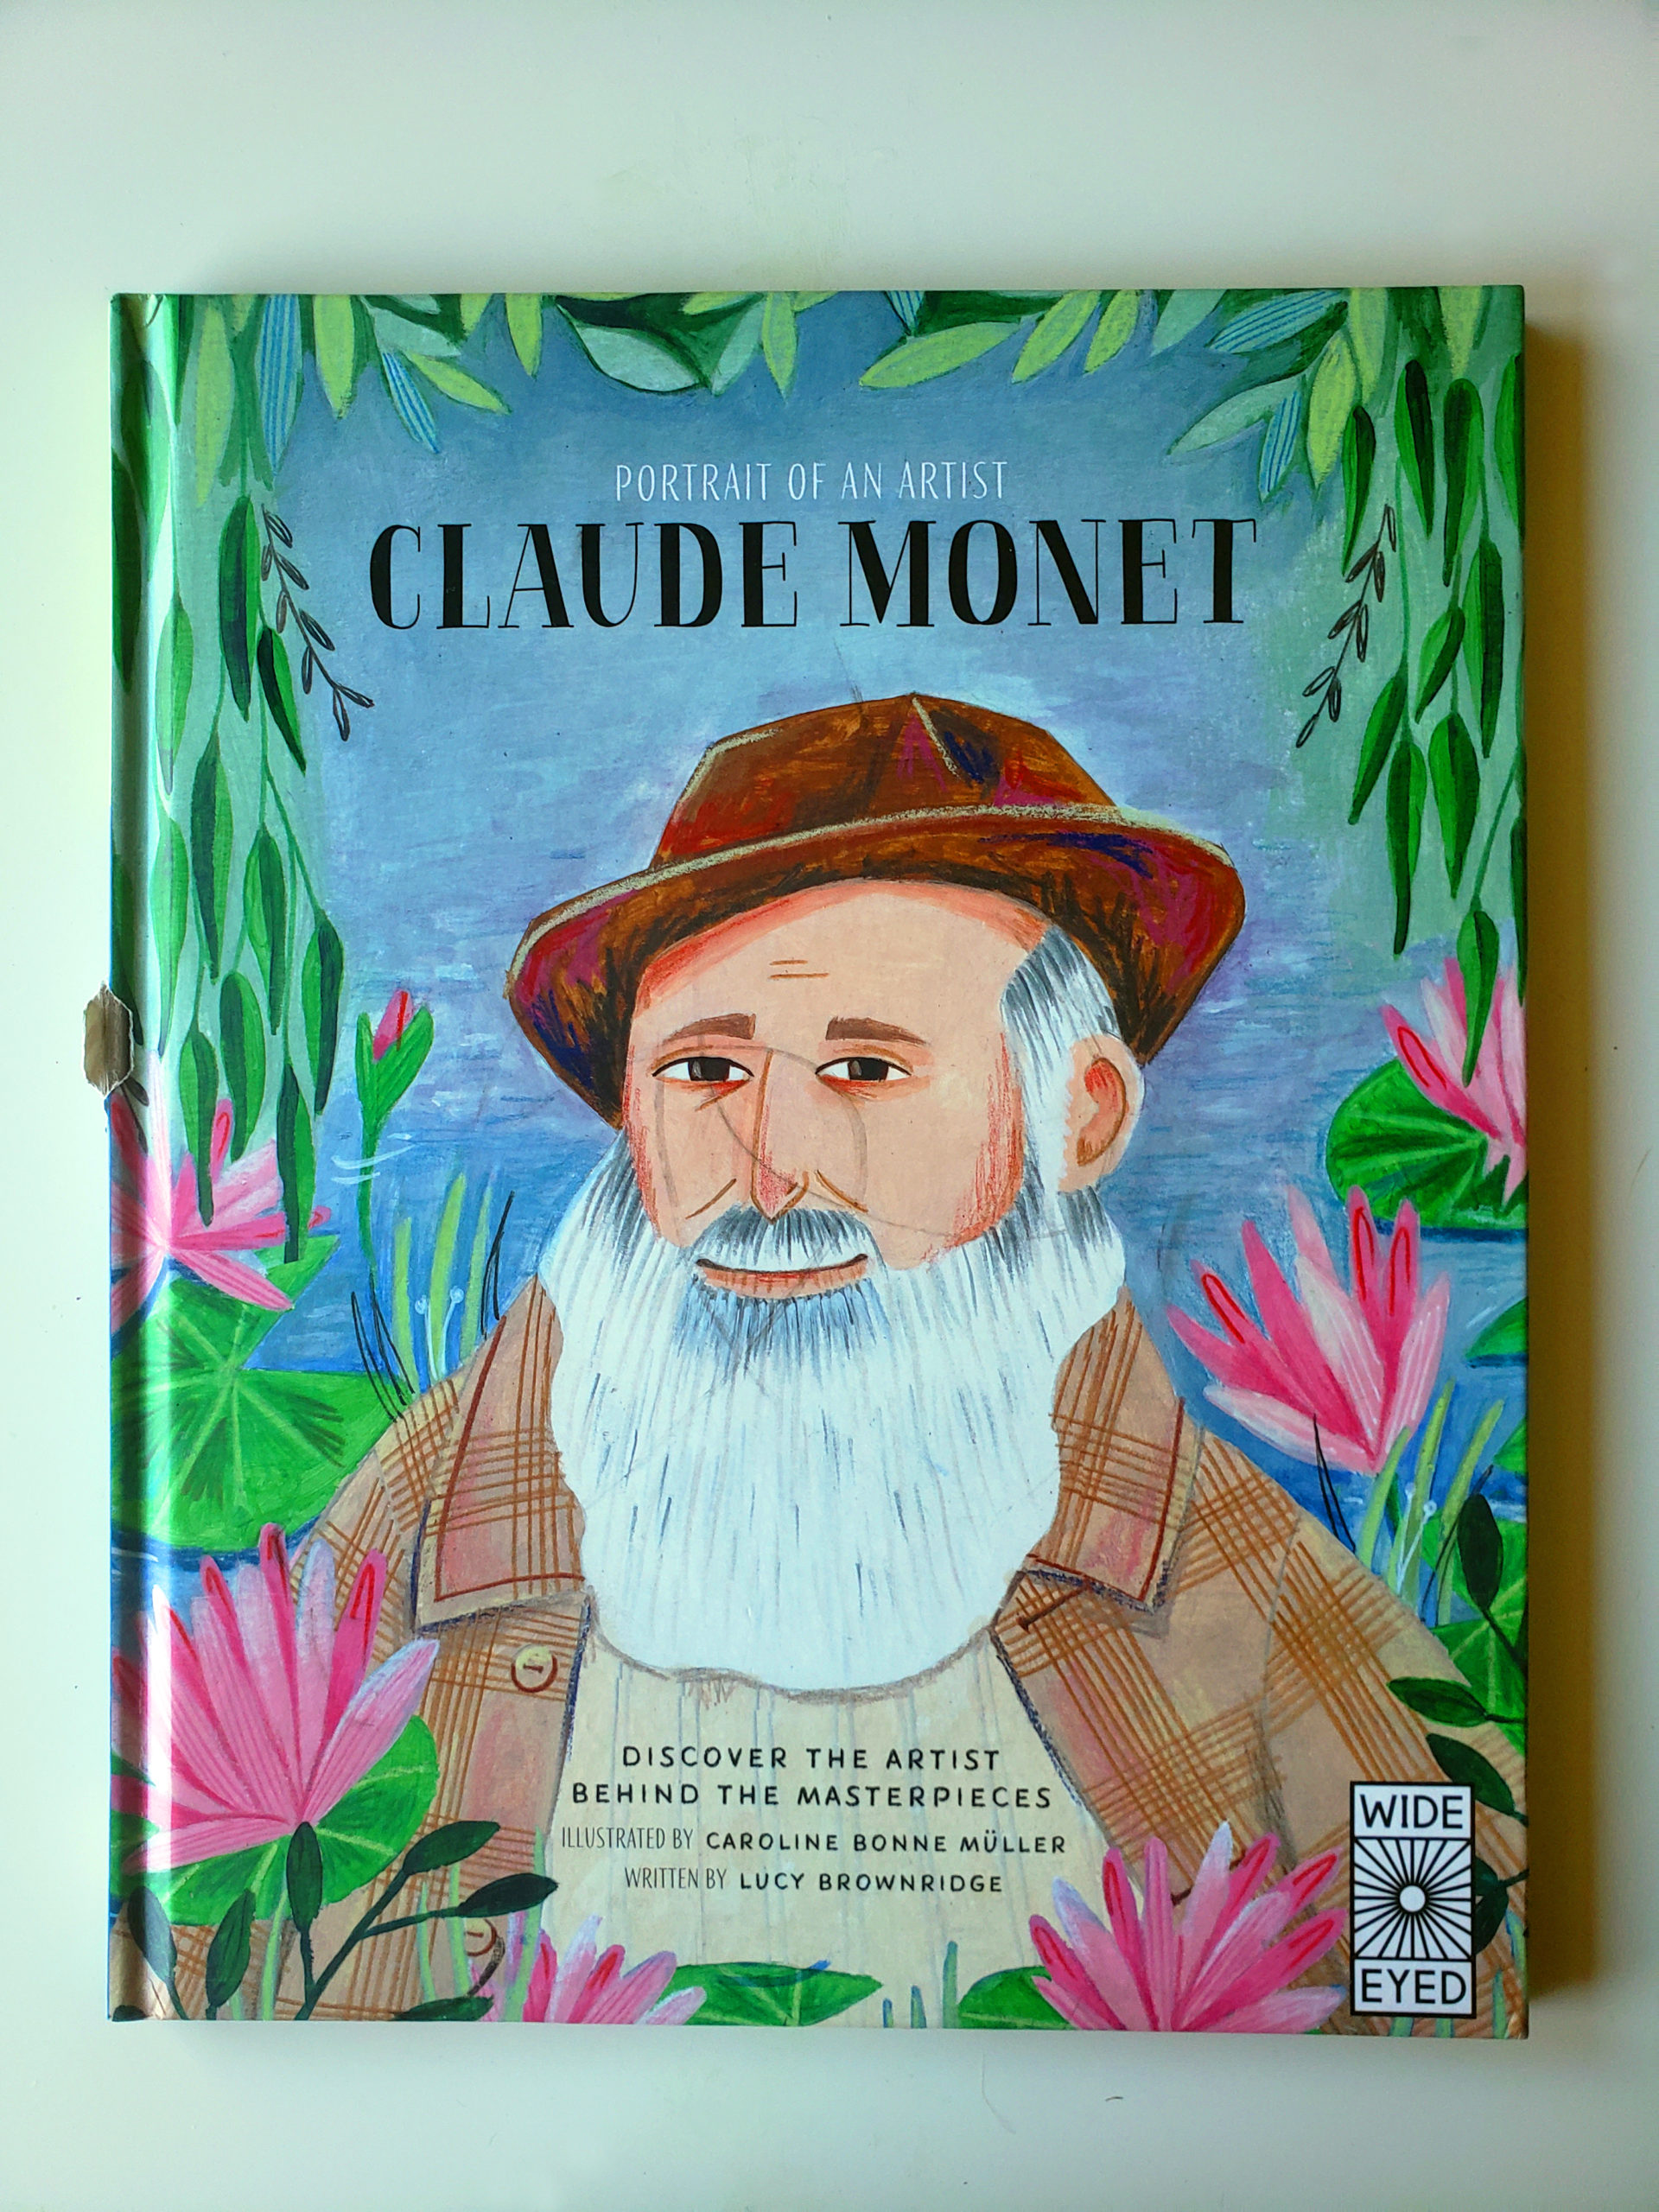 Portrait of an Artist: Claude Monet by Lucy Brownbridge